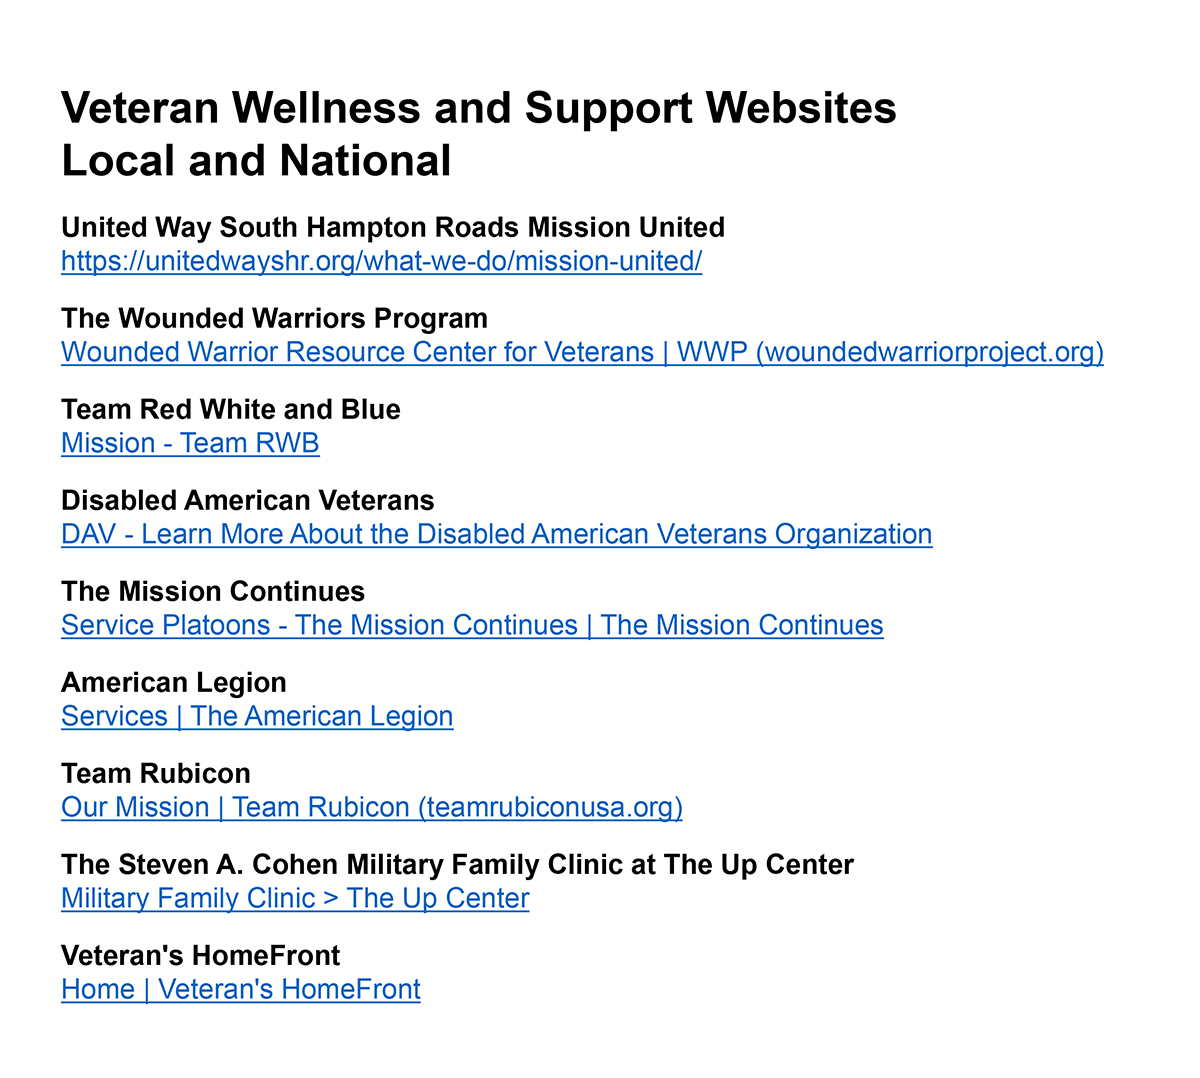 Veteran Wellness And Support Websitesrev